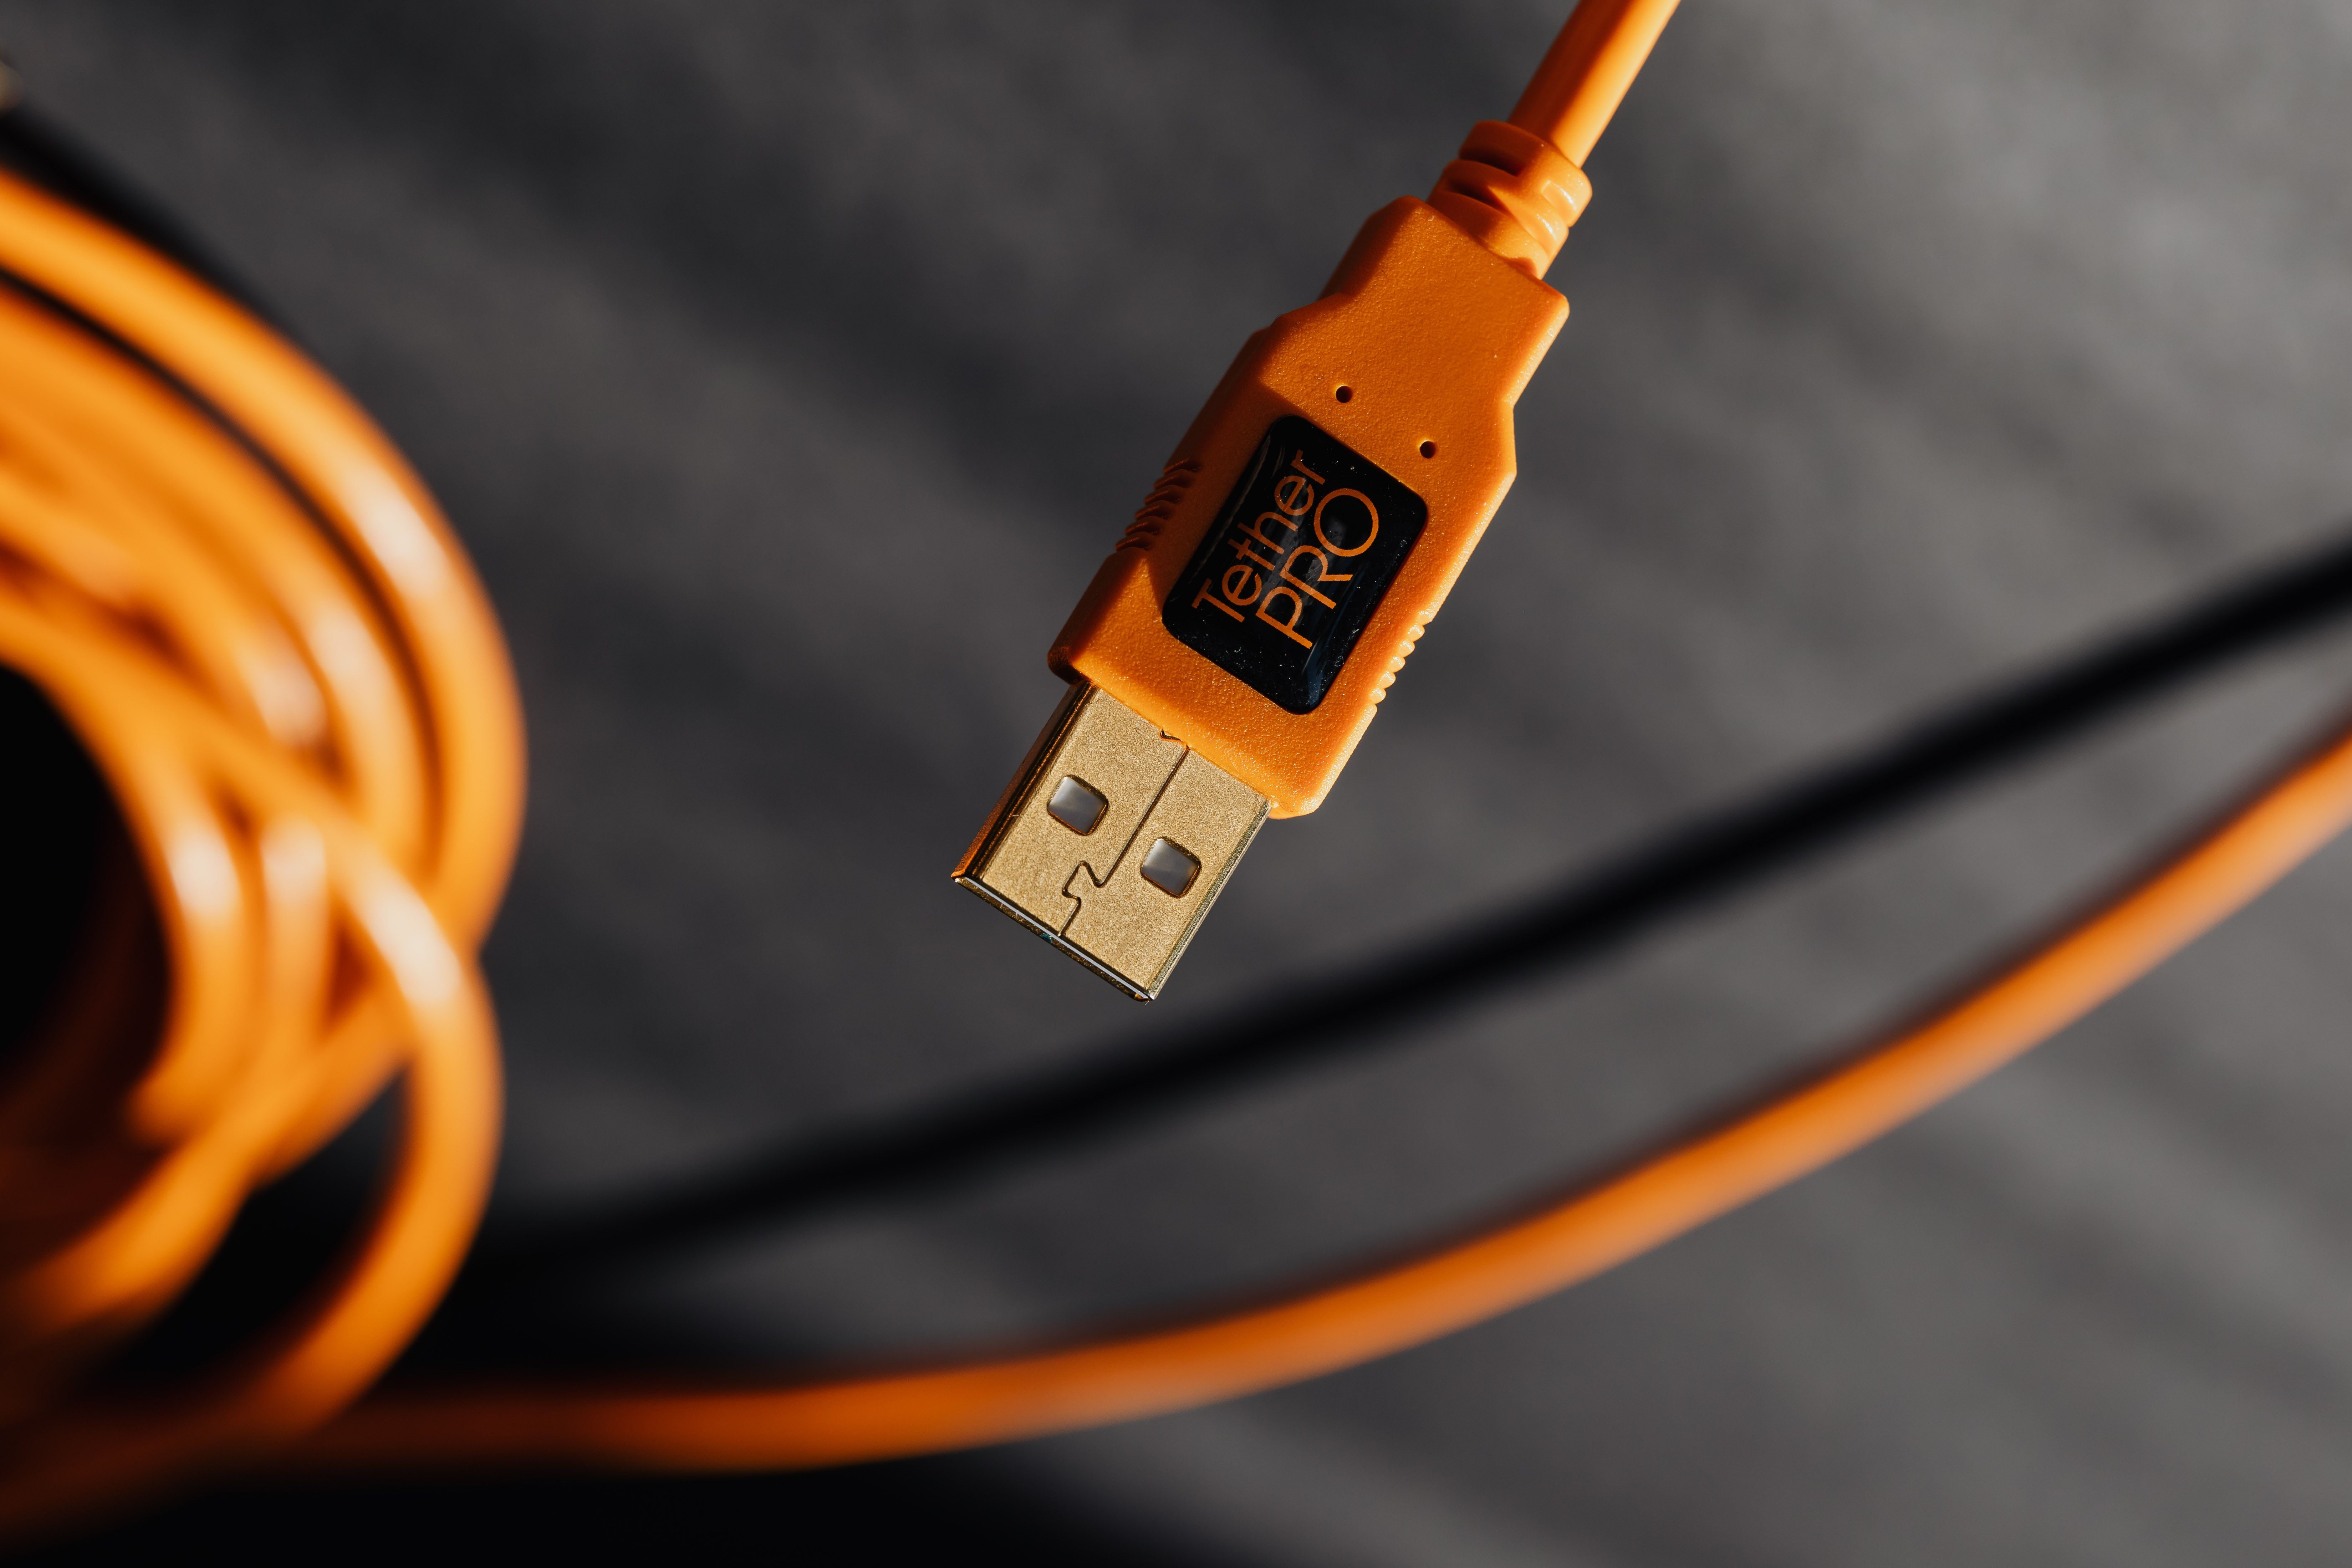 Close-up of orange USB cable